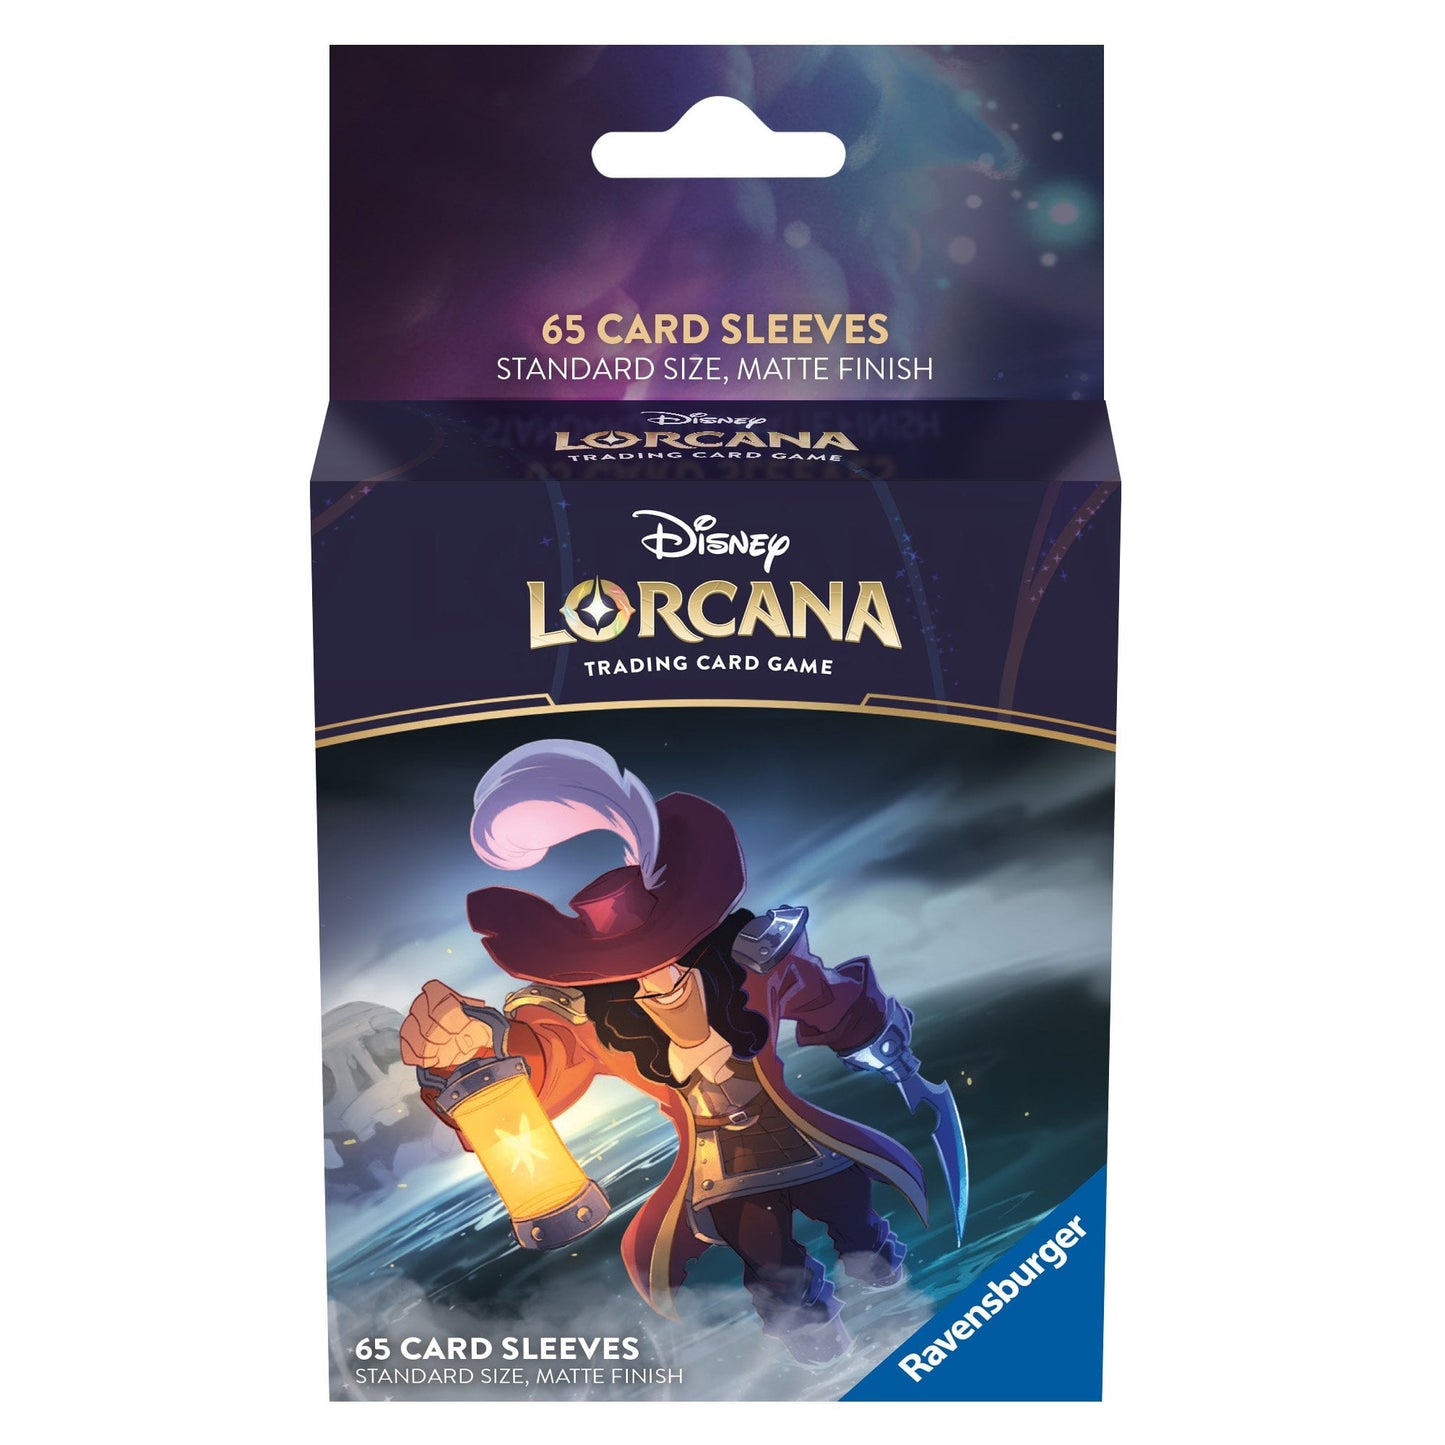 Disney Lorcana Card Sleeve Pack Hook